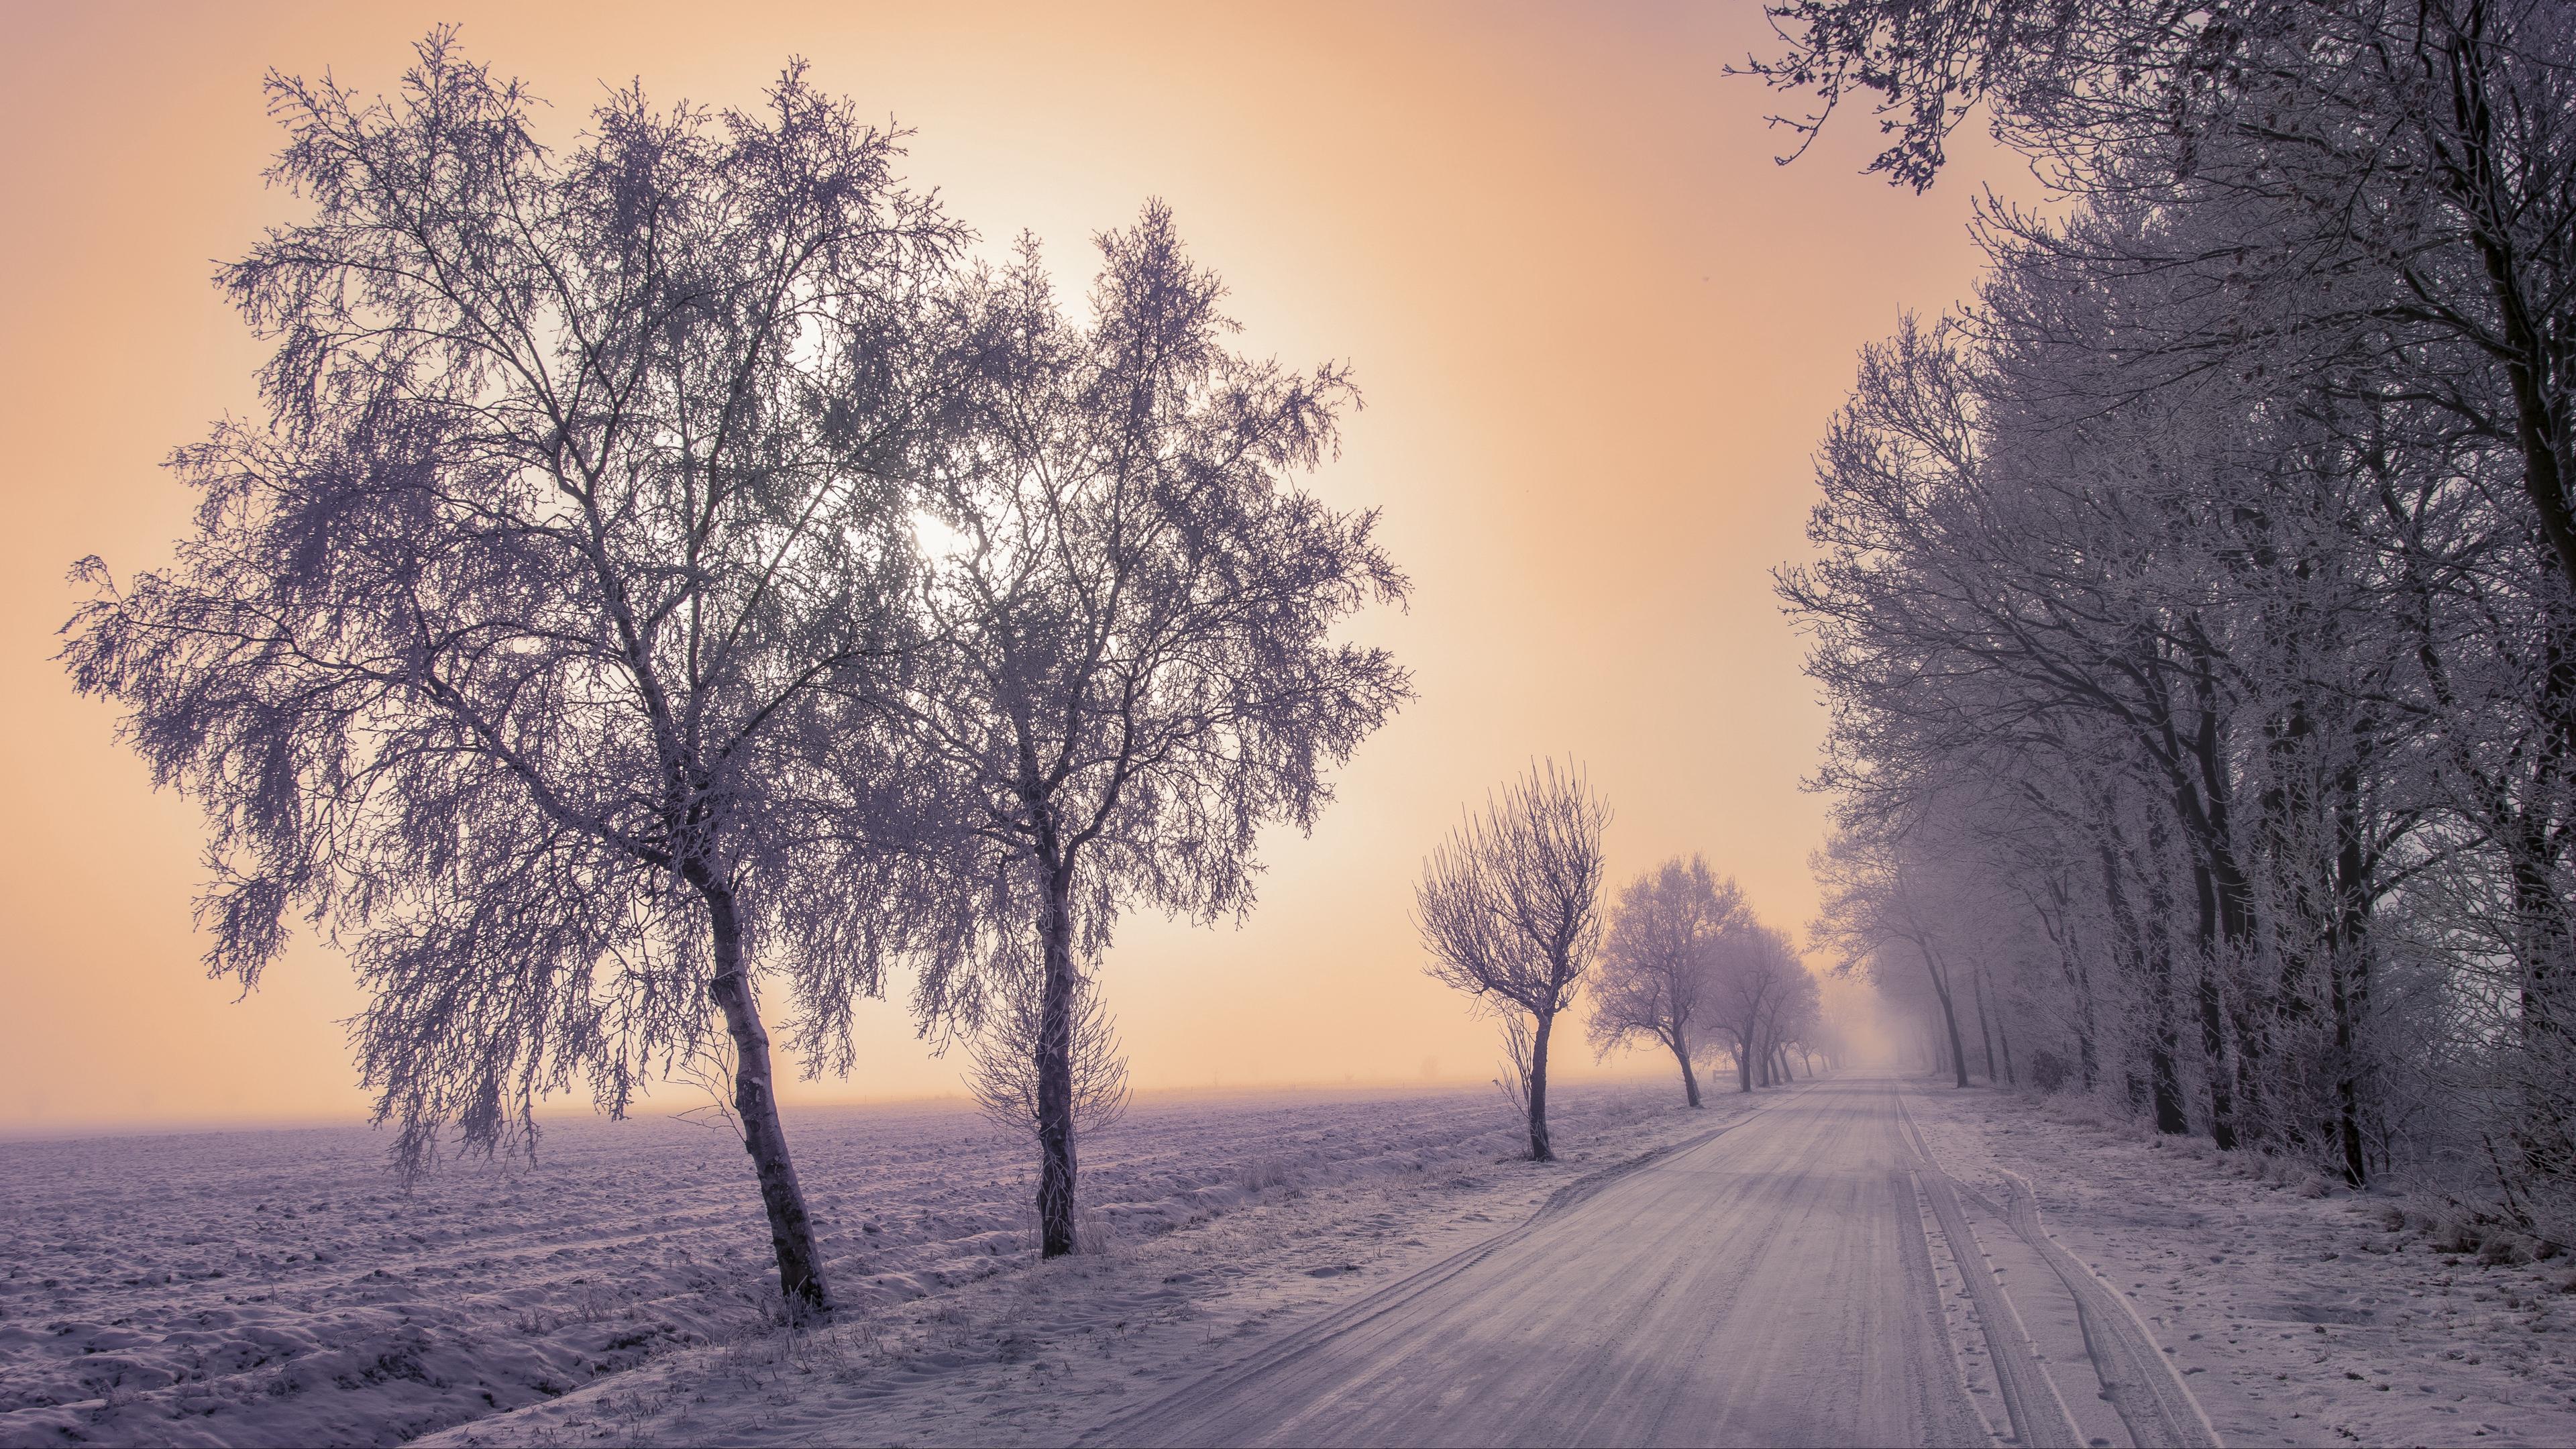 Download wallpaper 3840x2160 winter, road, snow, trees, fog